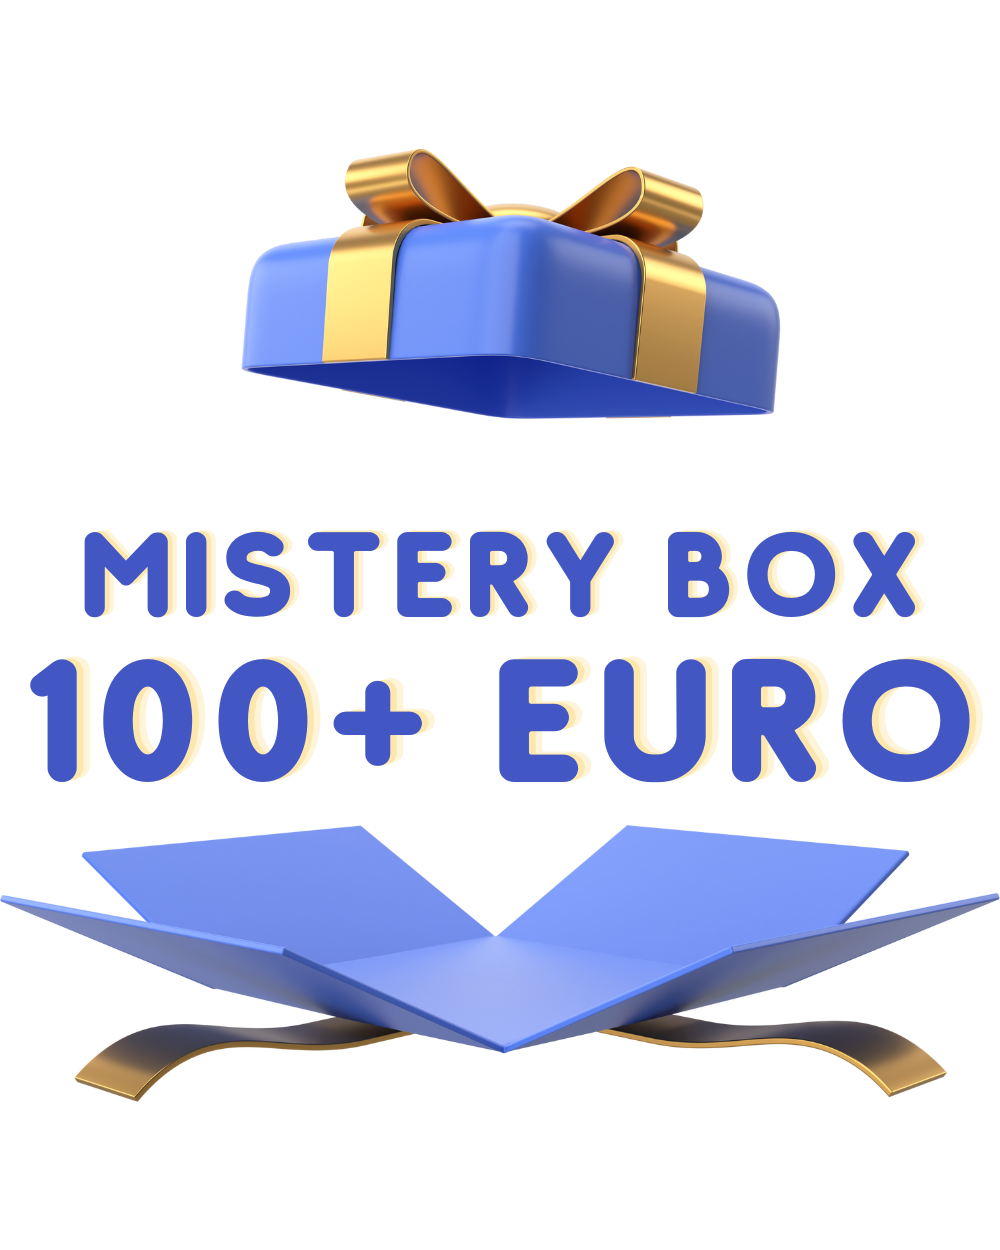 copy of MISTERY BOX 50+ EURO